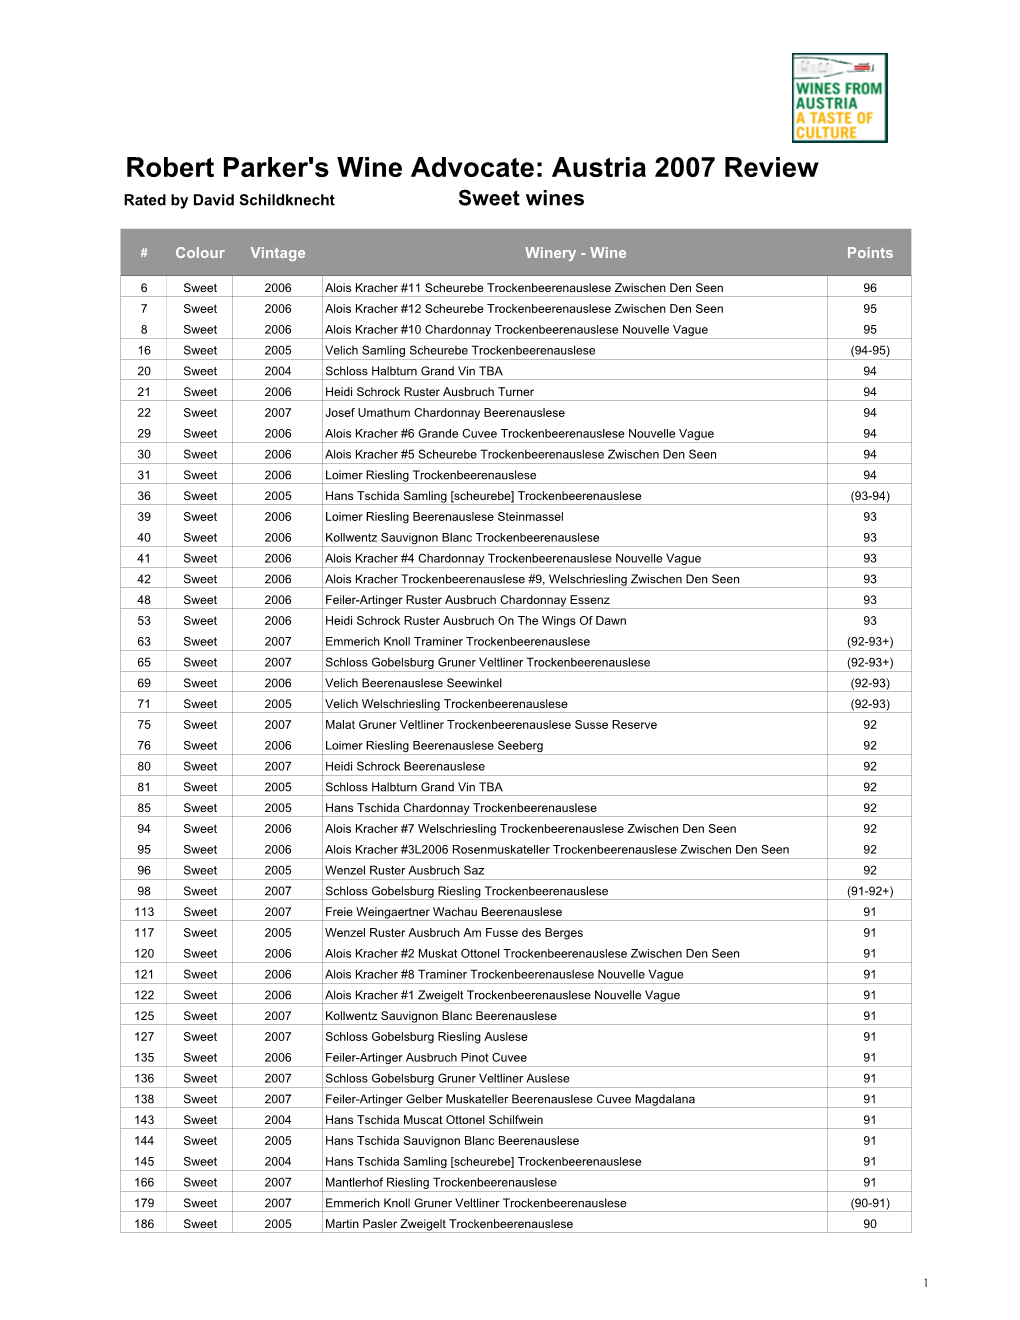 Robert Parker's Wine Advocate: Austria 2007 Review Rated by David Schildknecht Sweet Wines